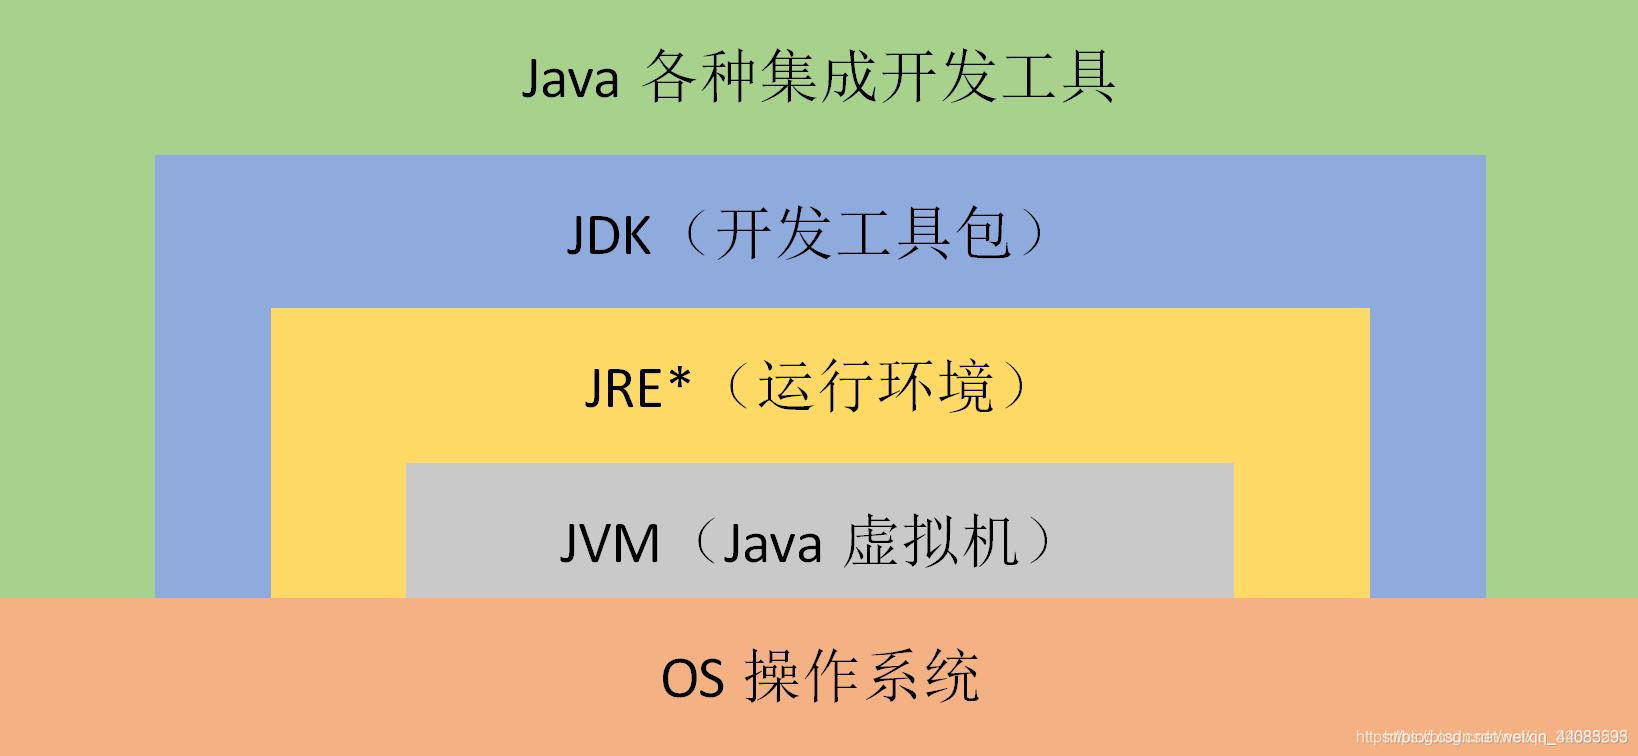 java中虚拟机jvm原理是什么